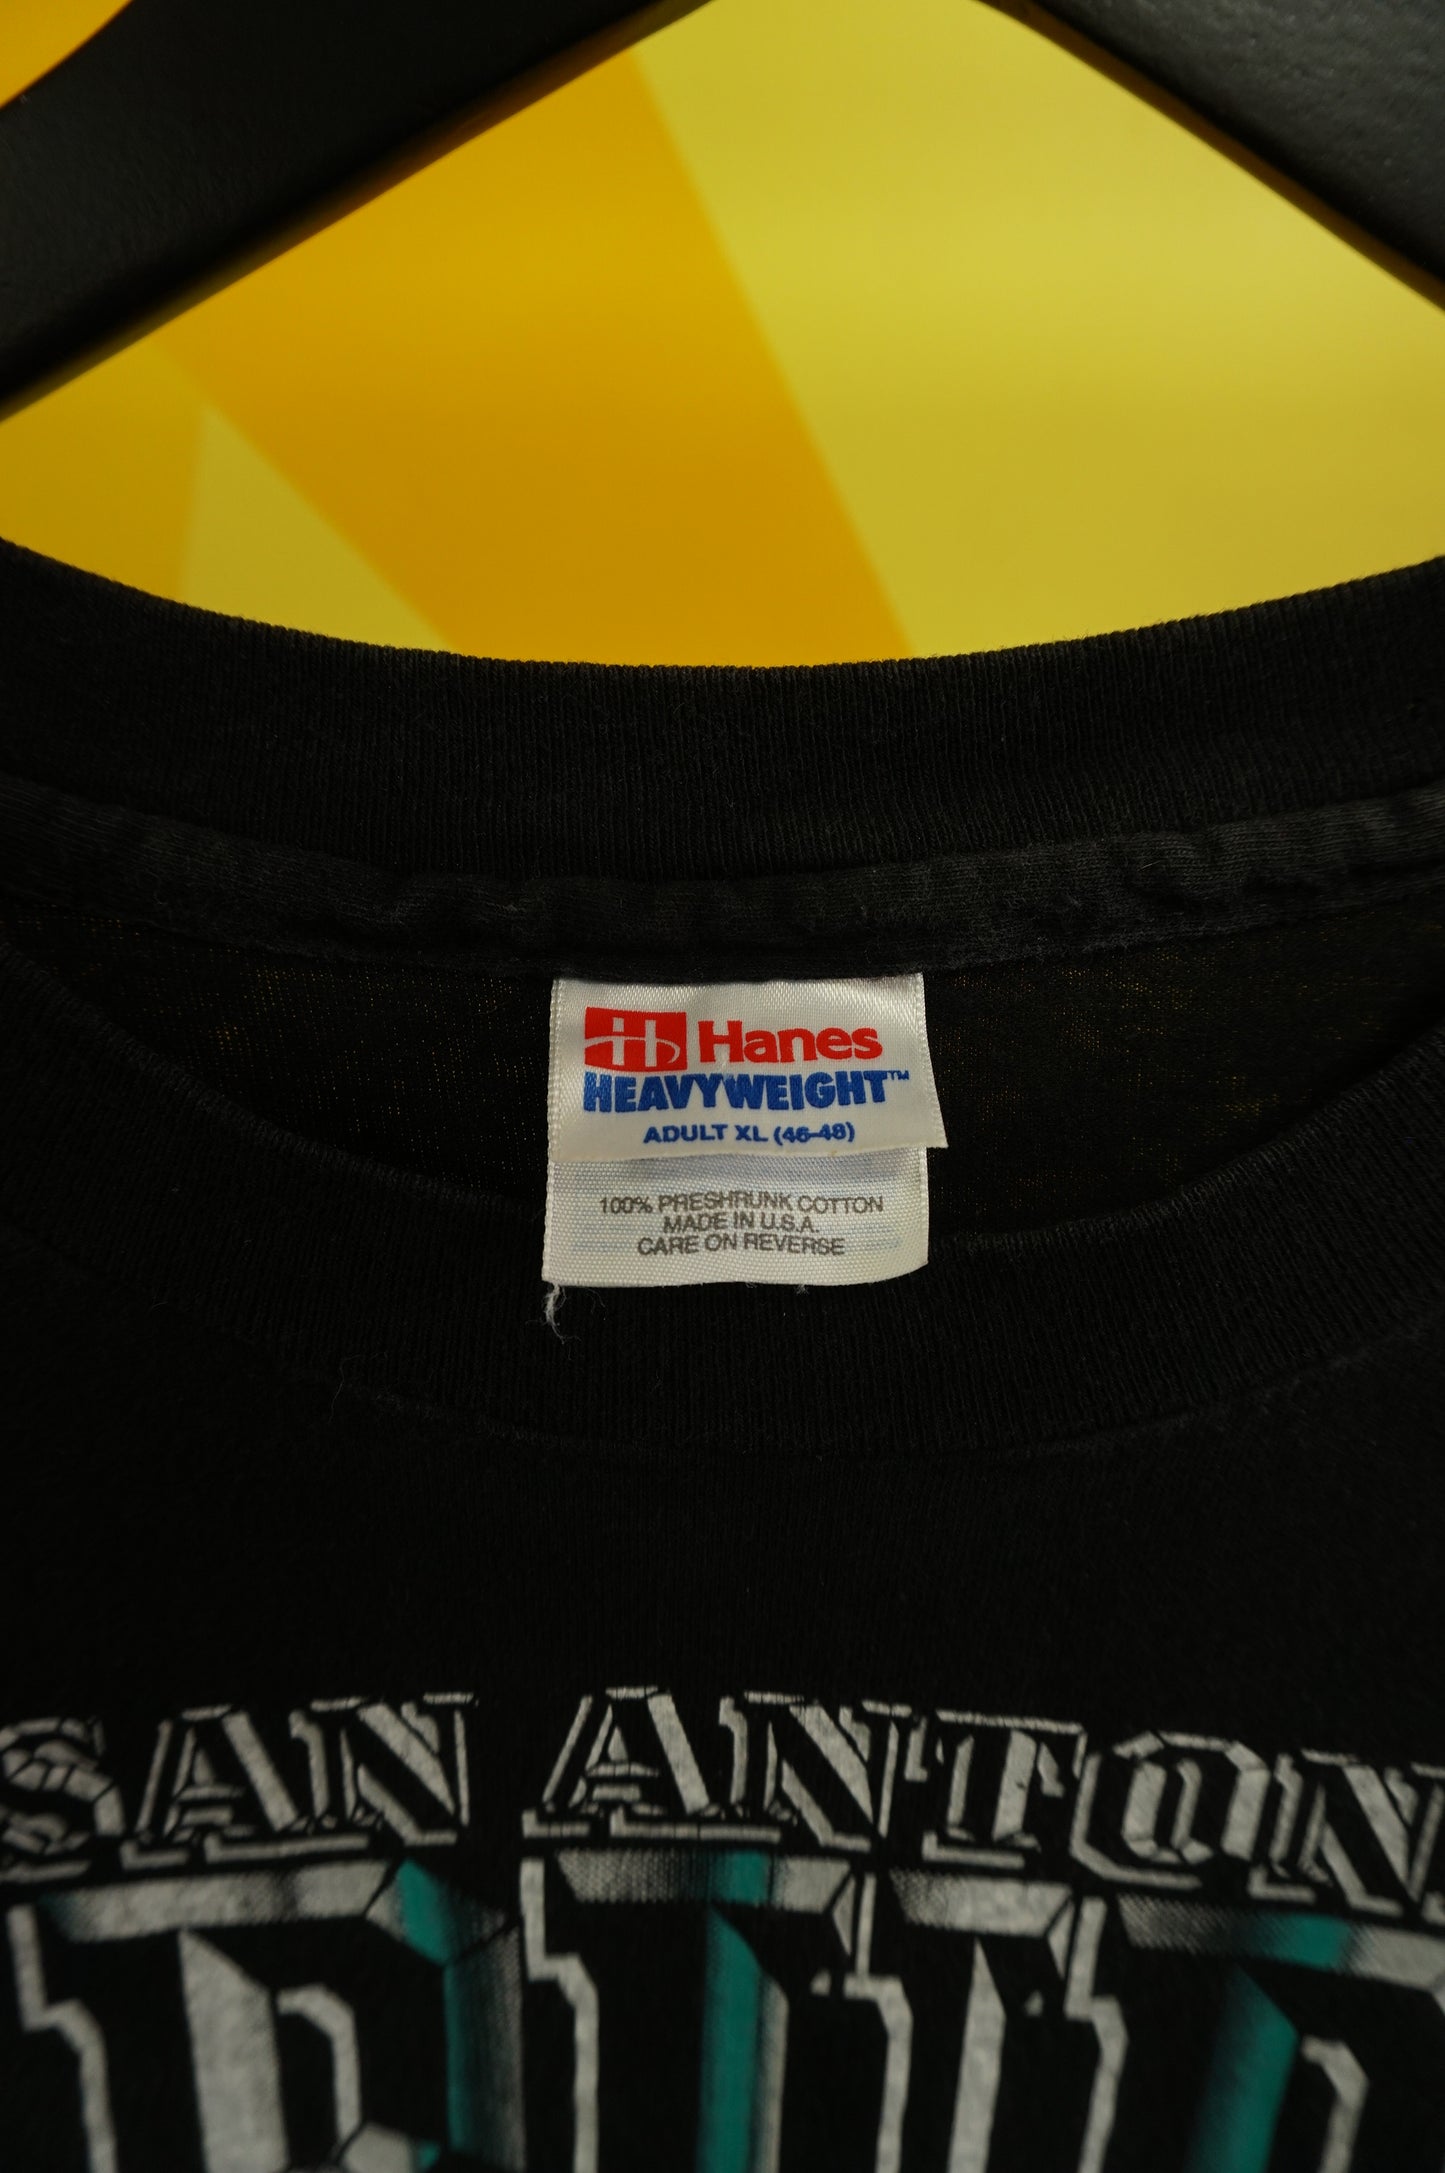 (XL) Vtg San Antonio Spurs Single Stitch T-Shirt